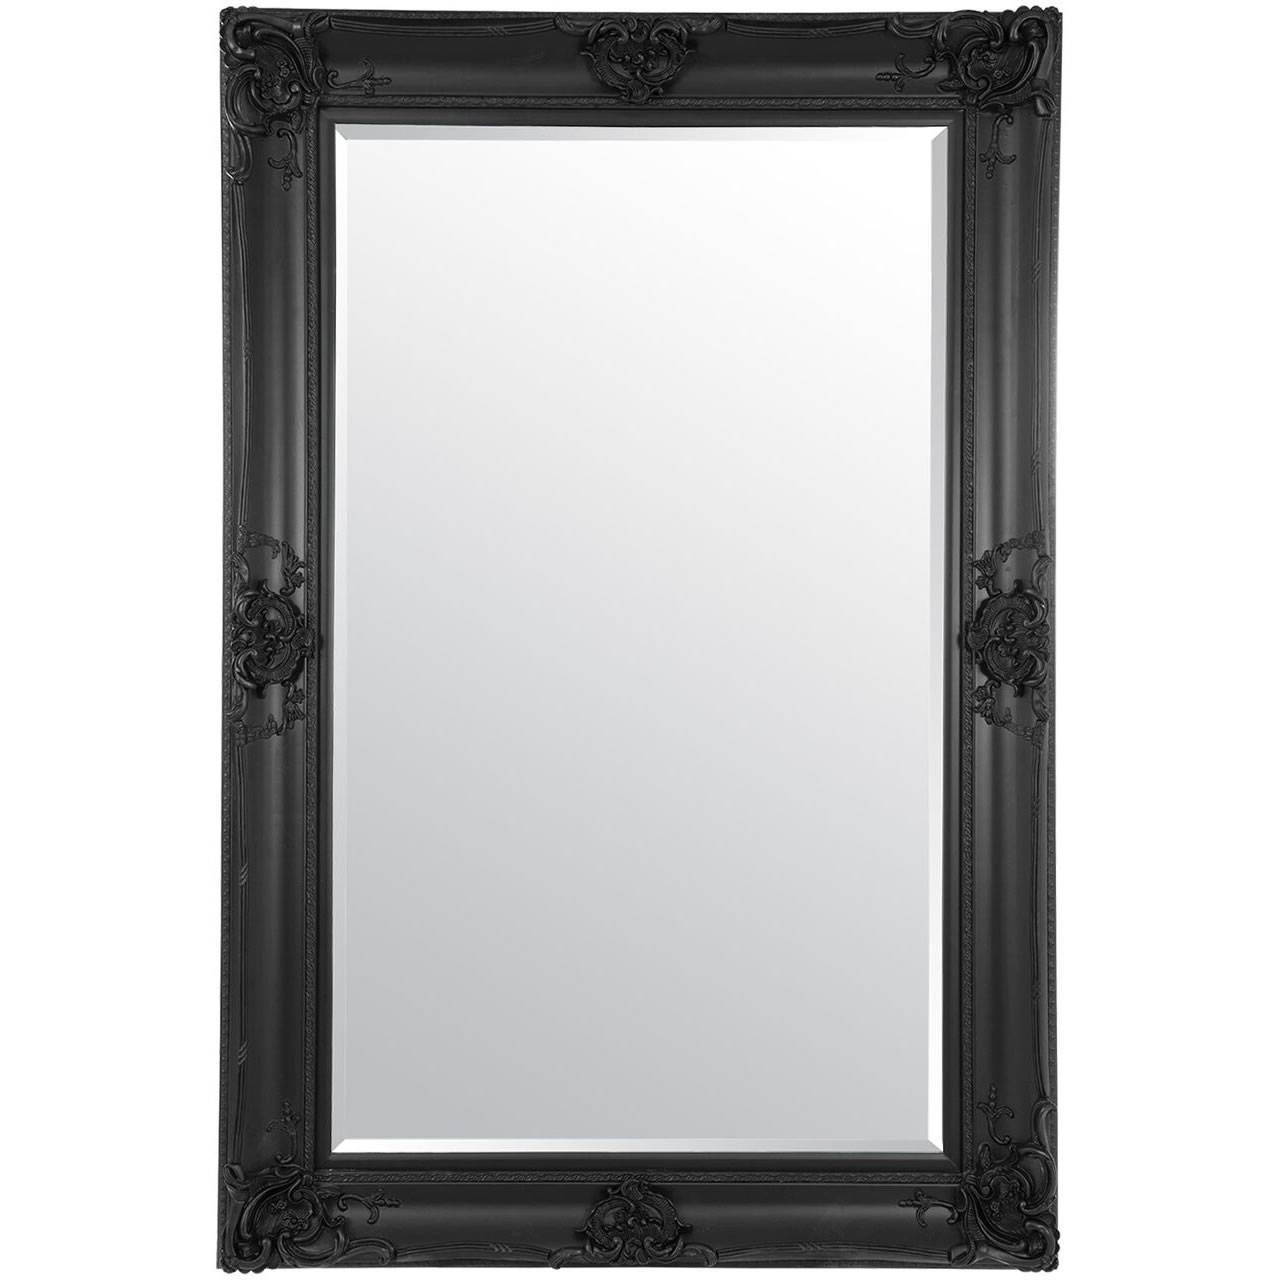 Black Mirrors Pertaining To Ornate Black Mirrors (View 12 of 15)